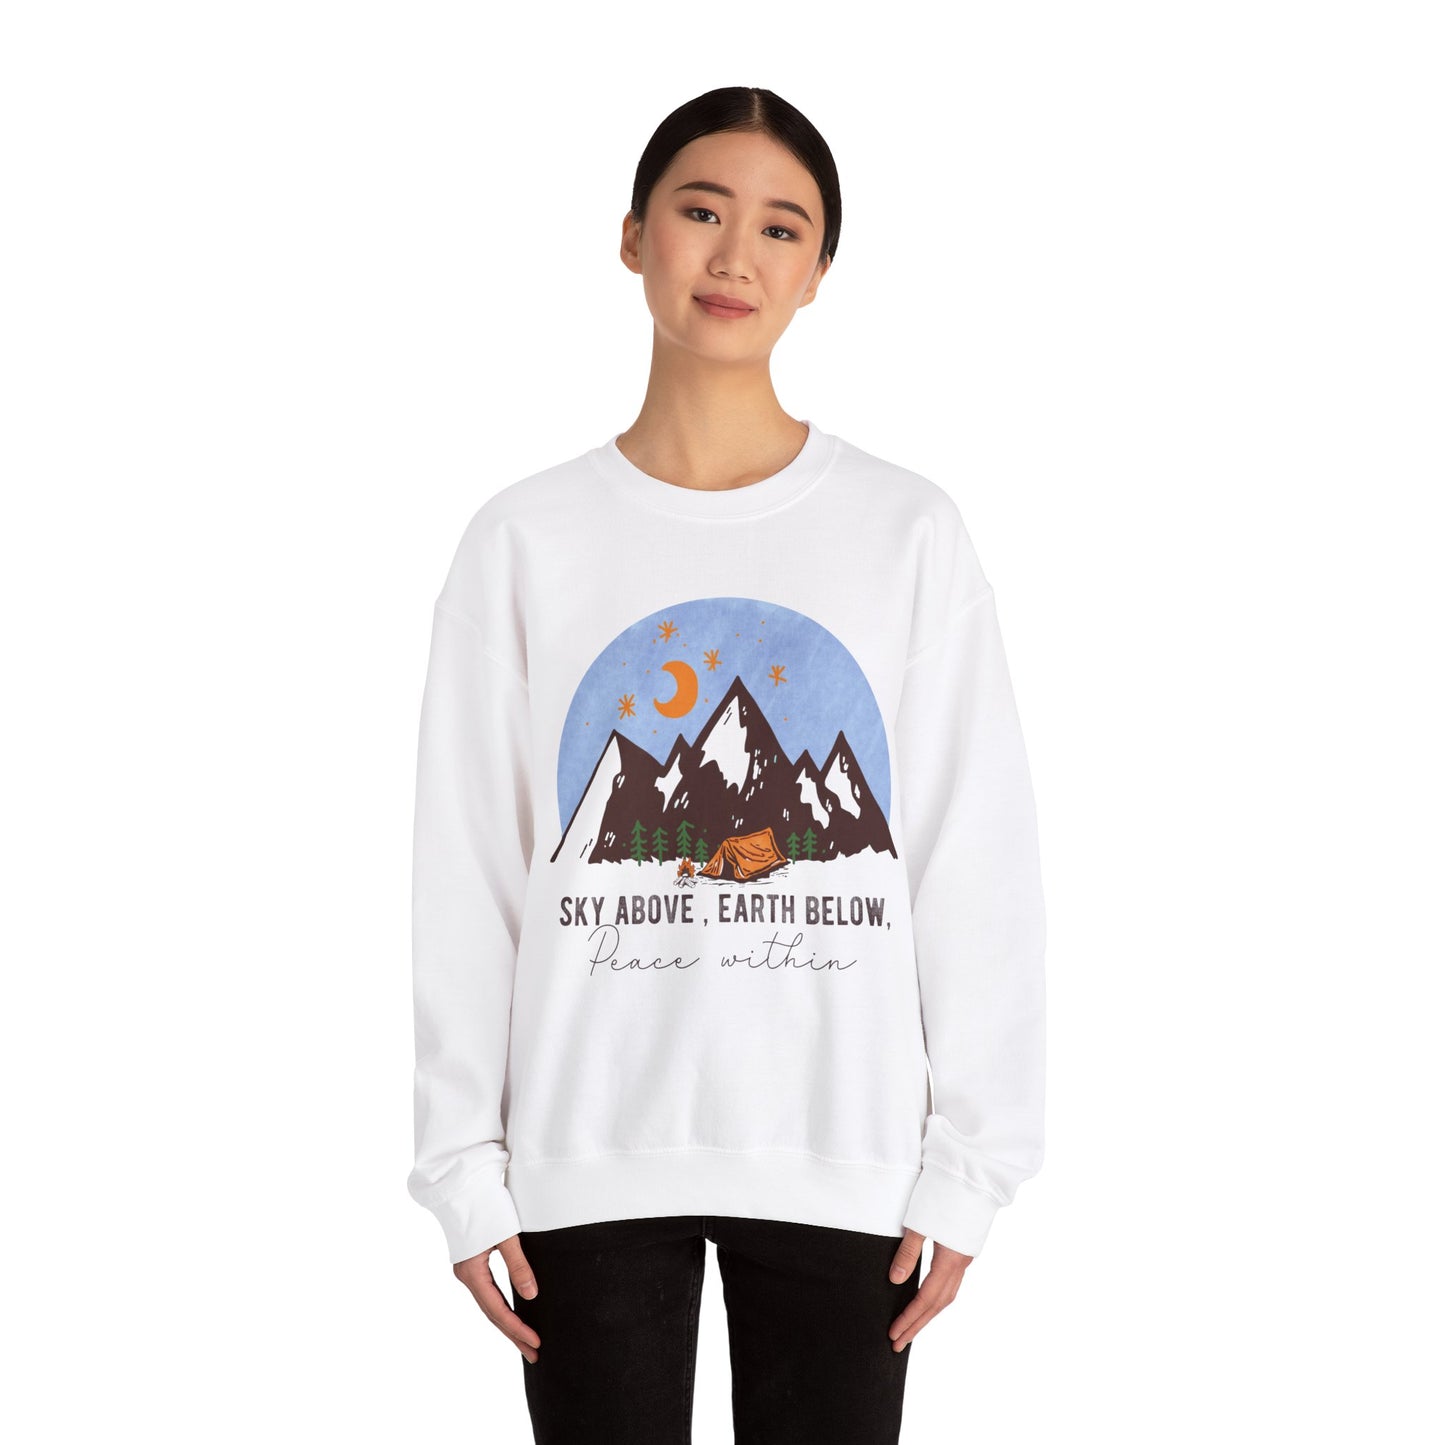 Camping Peace Within Women's Camping Hiking Sweatshirt